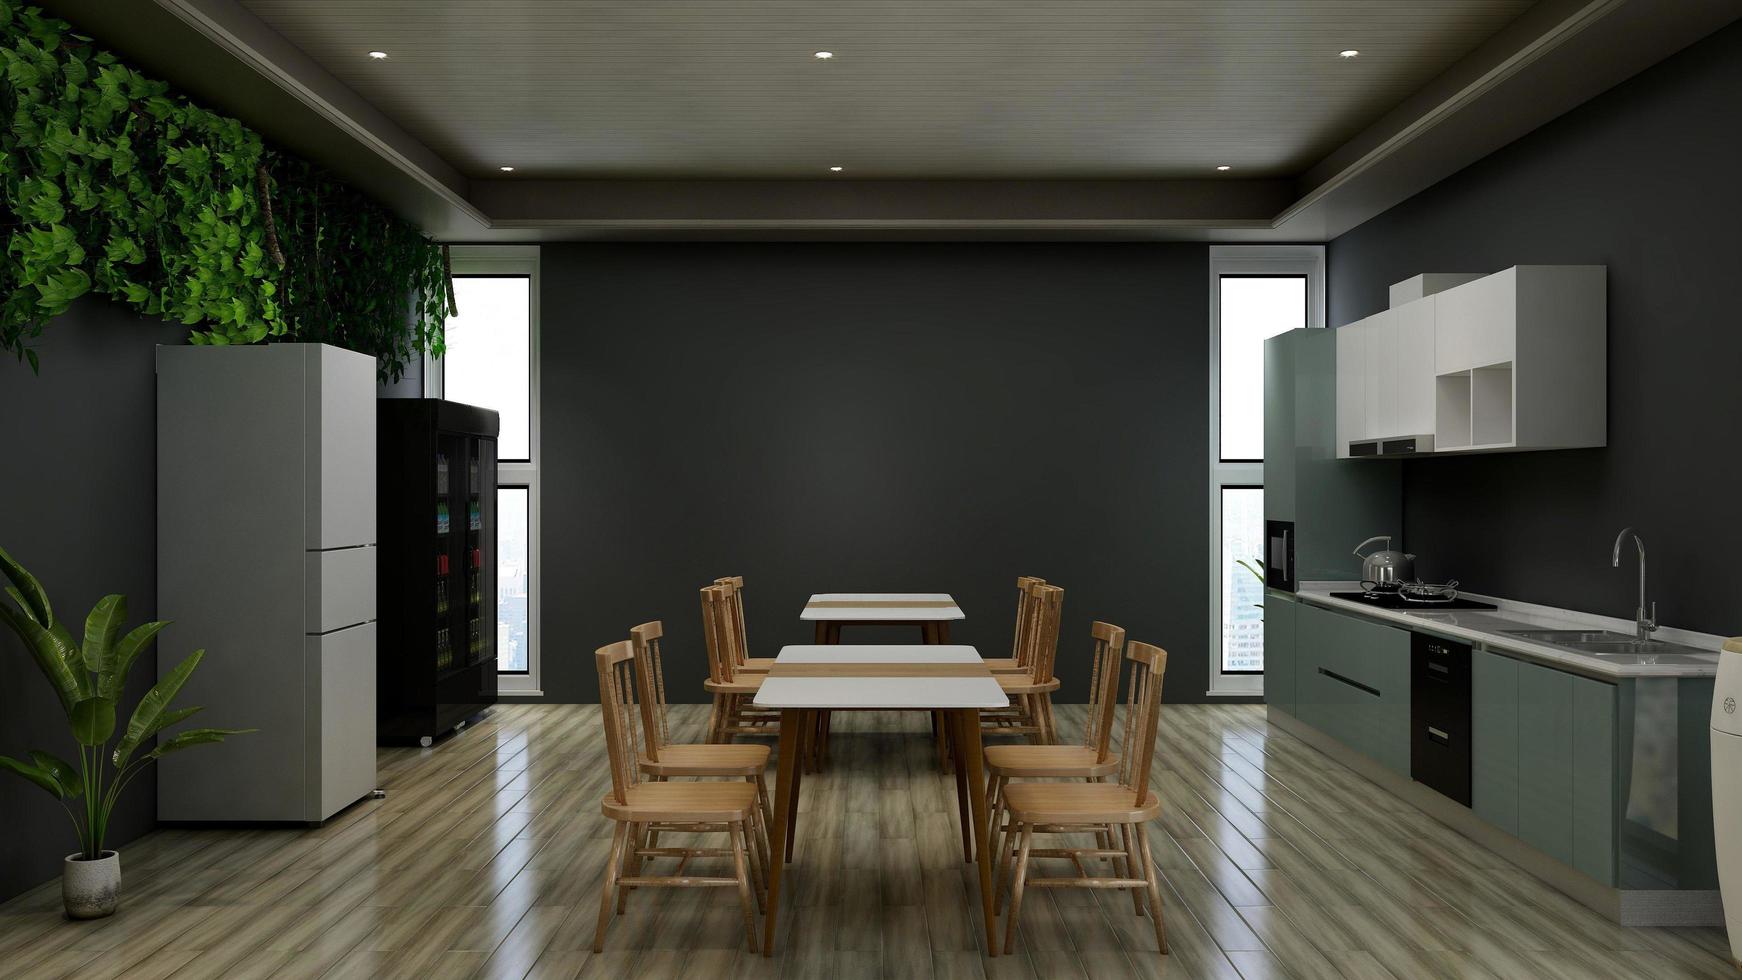 3d render of minimalist office pantry photo